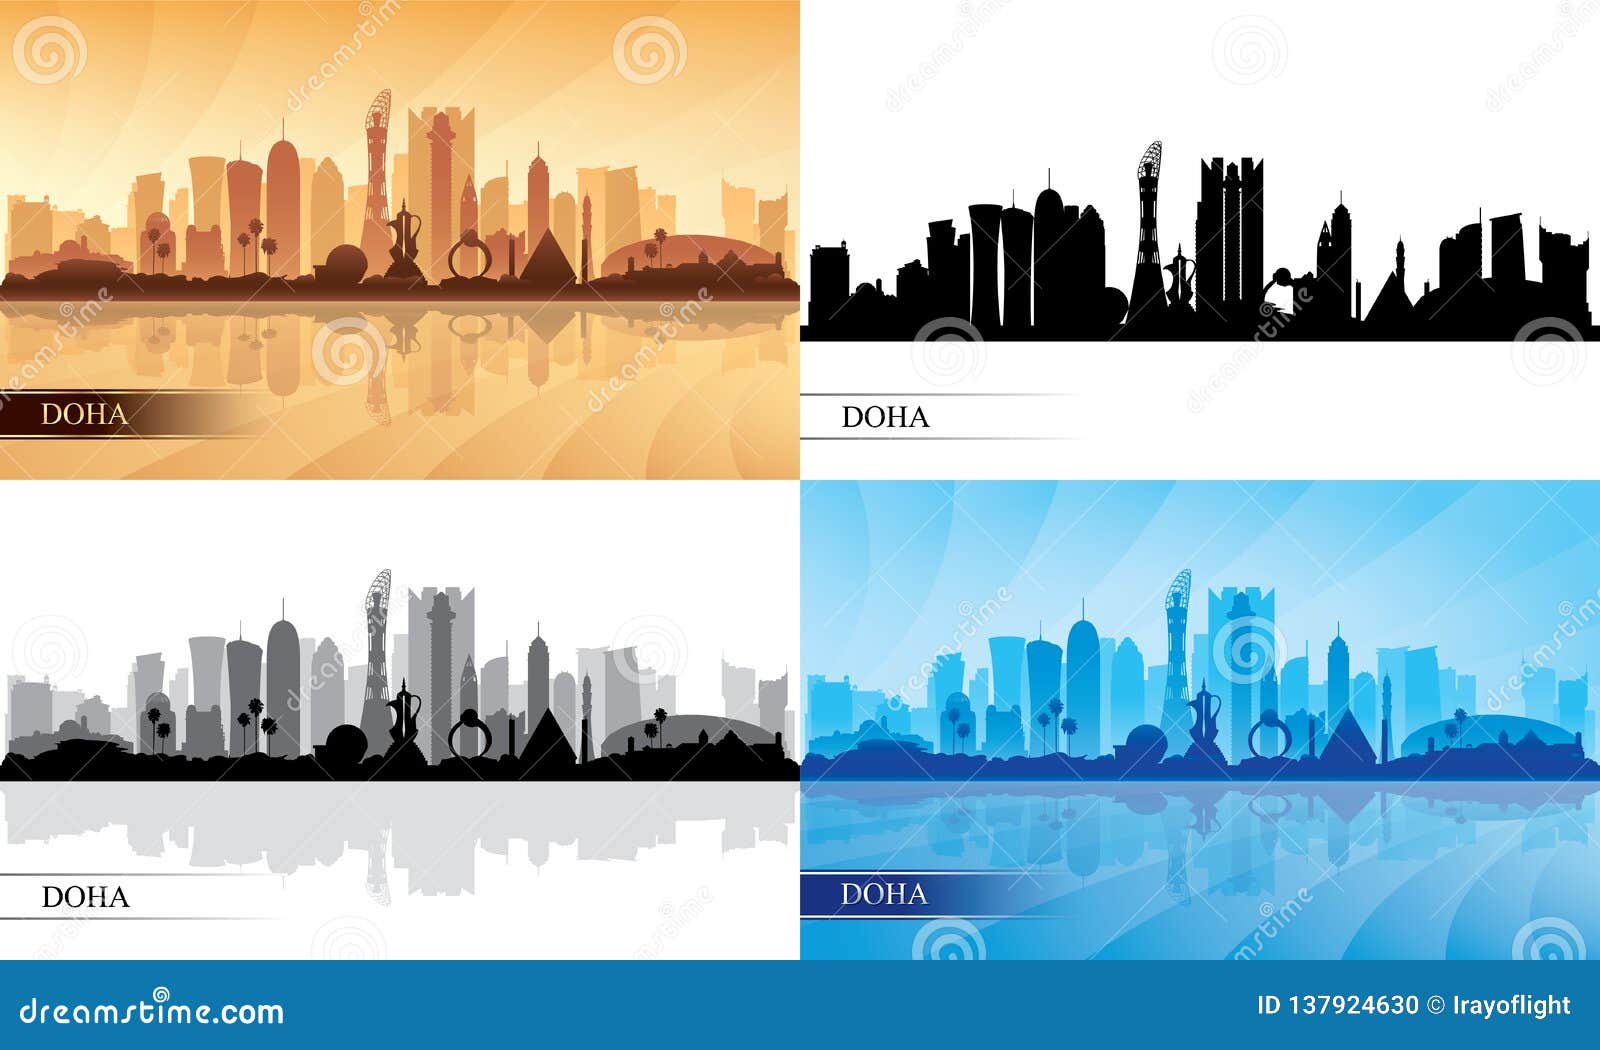 doha city skyline silhouettes set